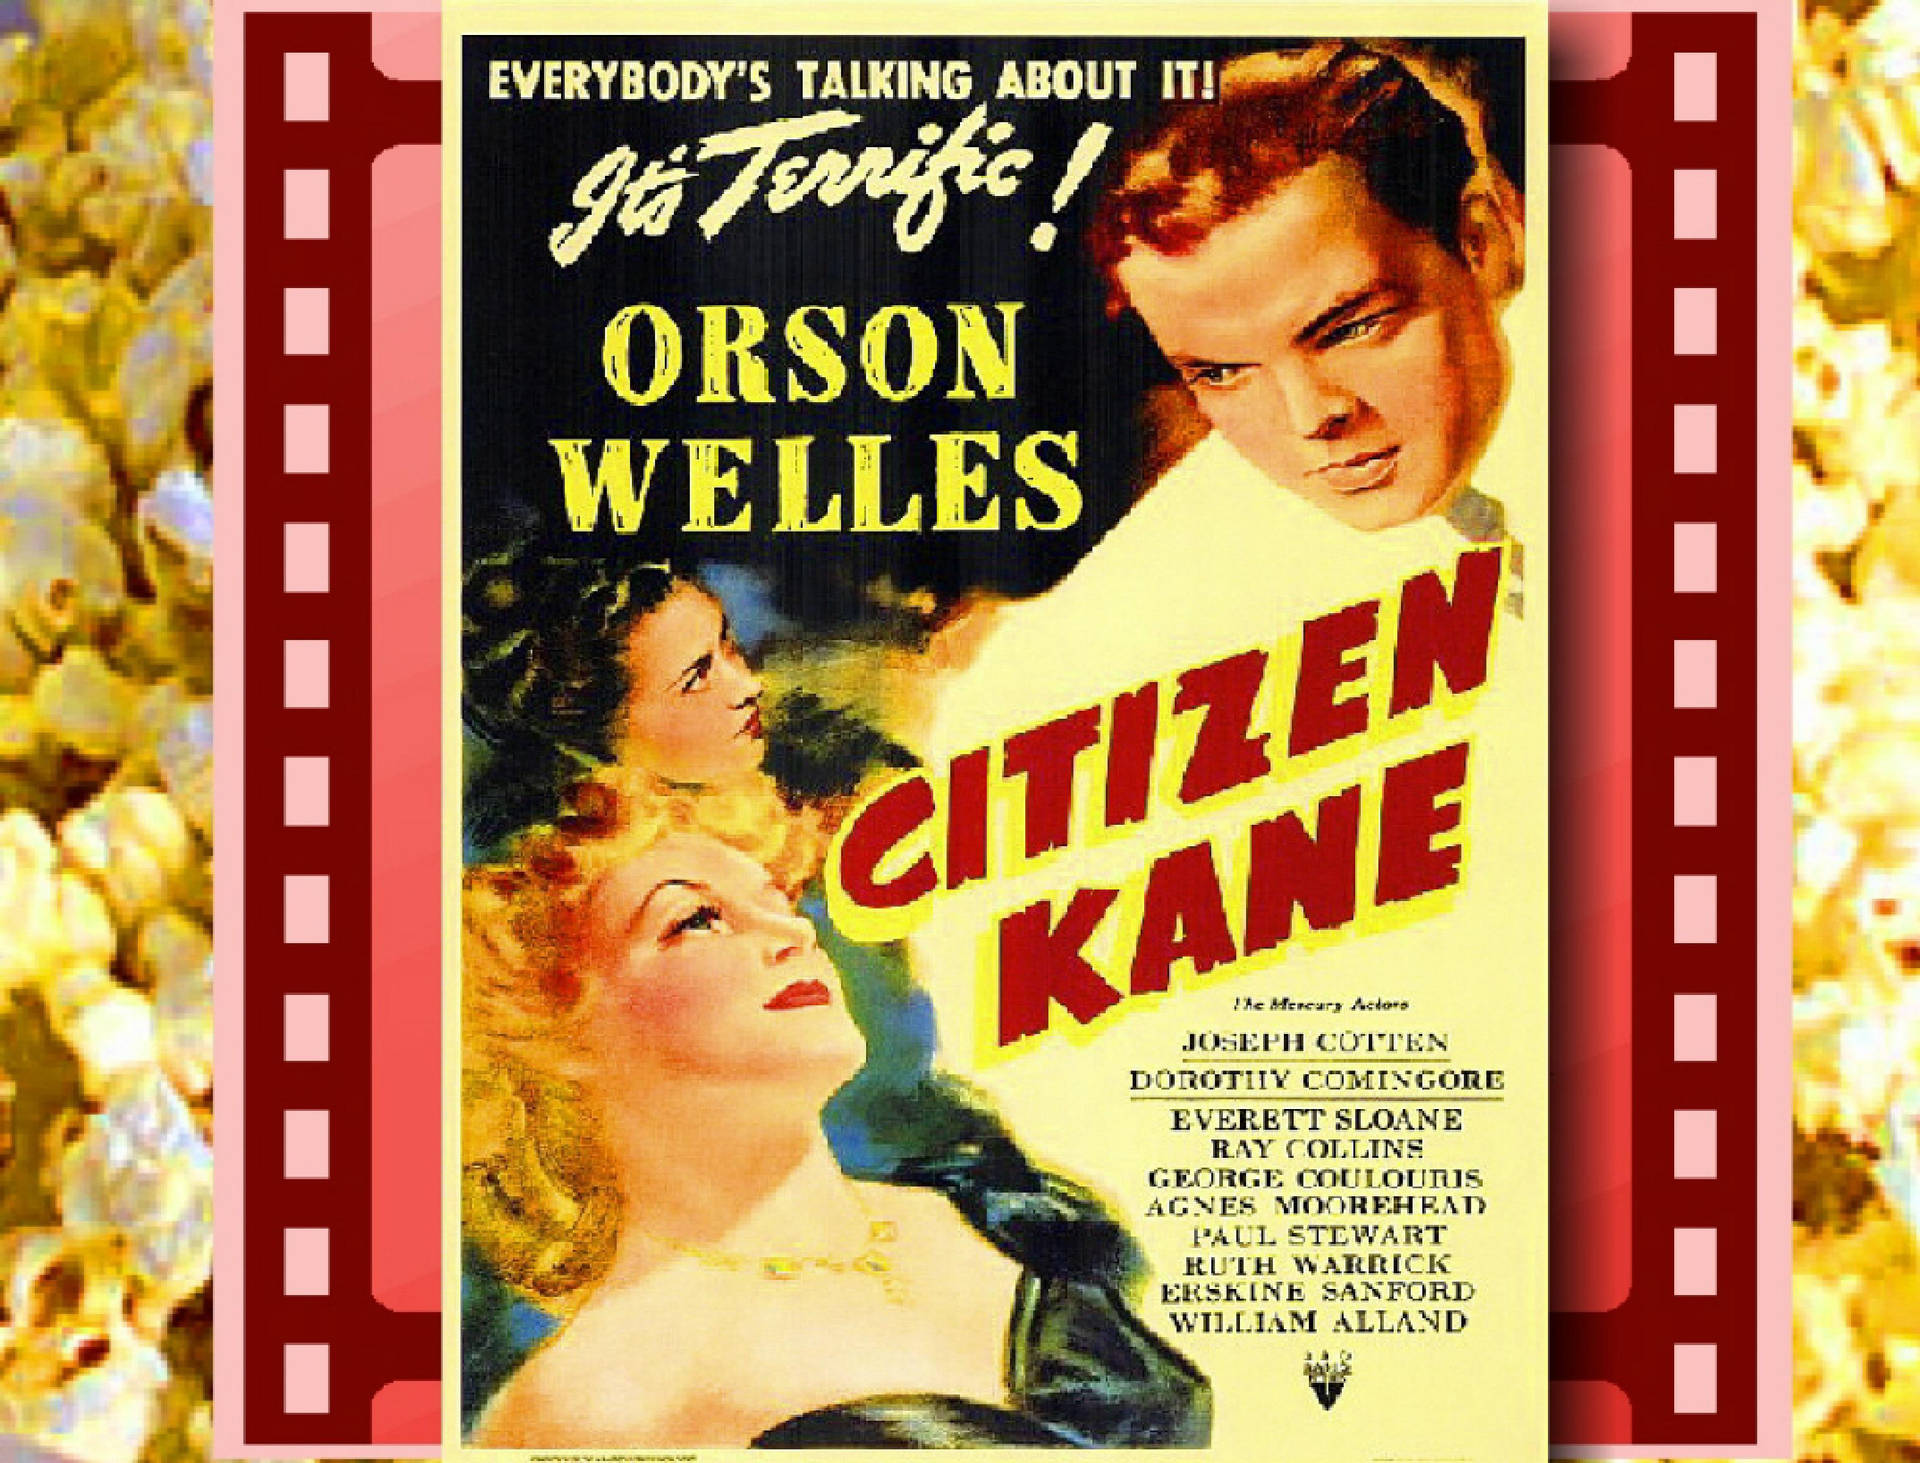 Citizen Kane Popcorn Wallpaper